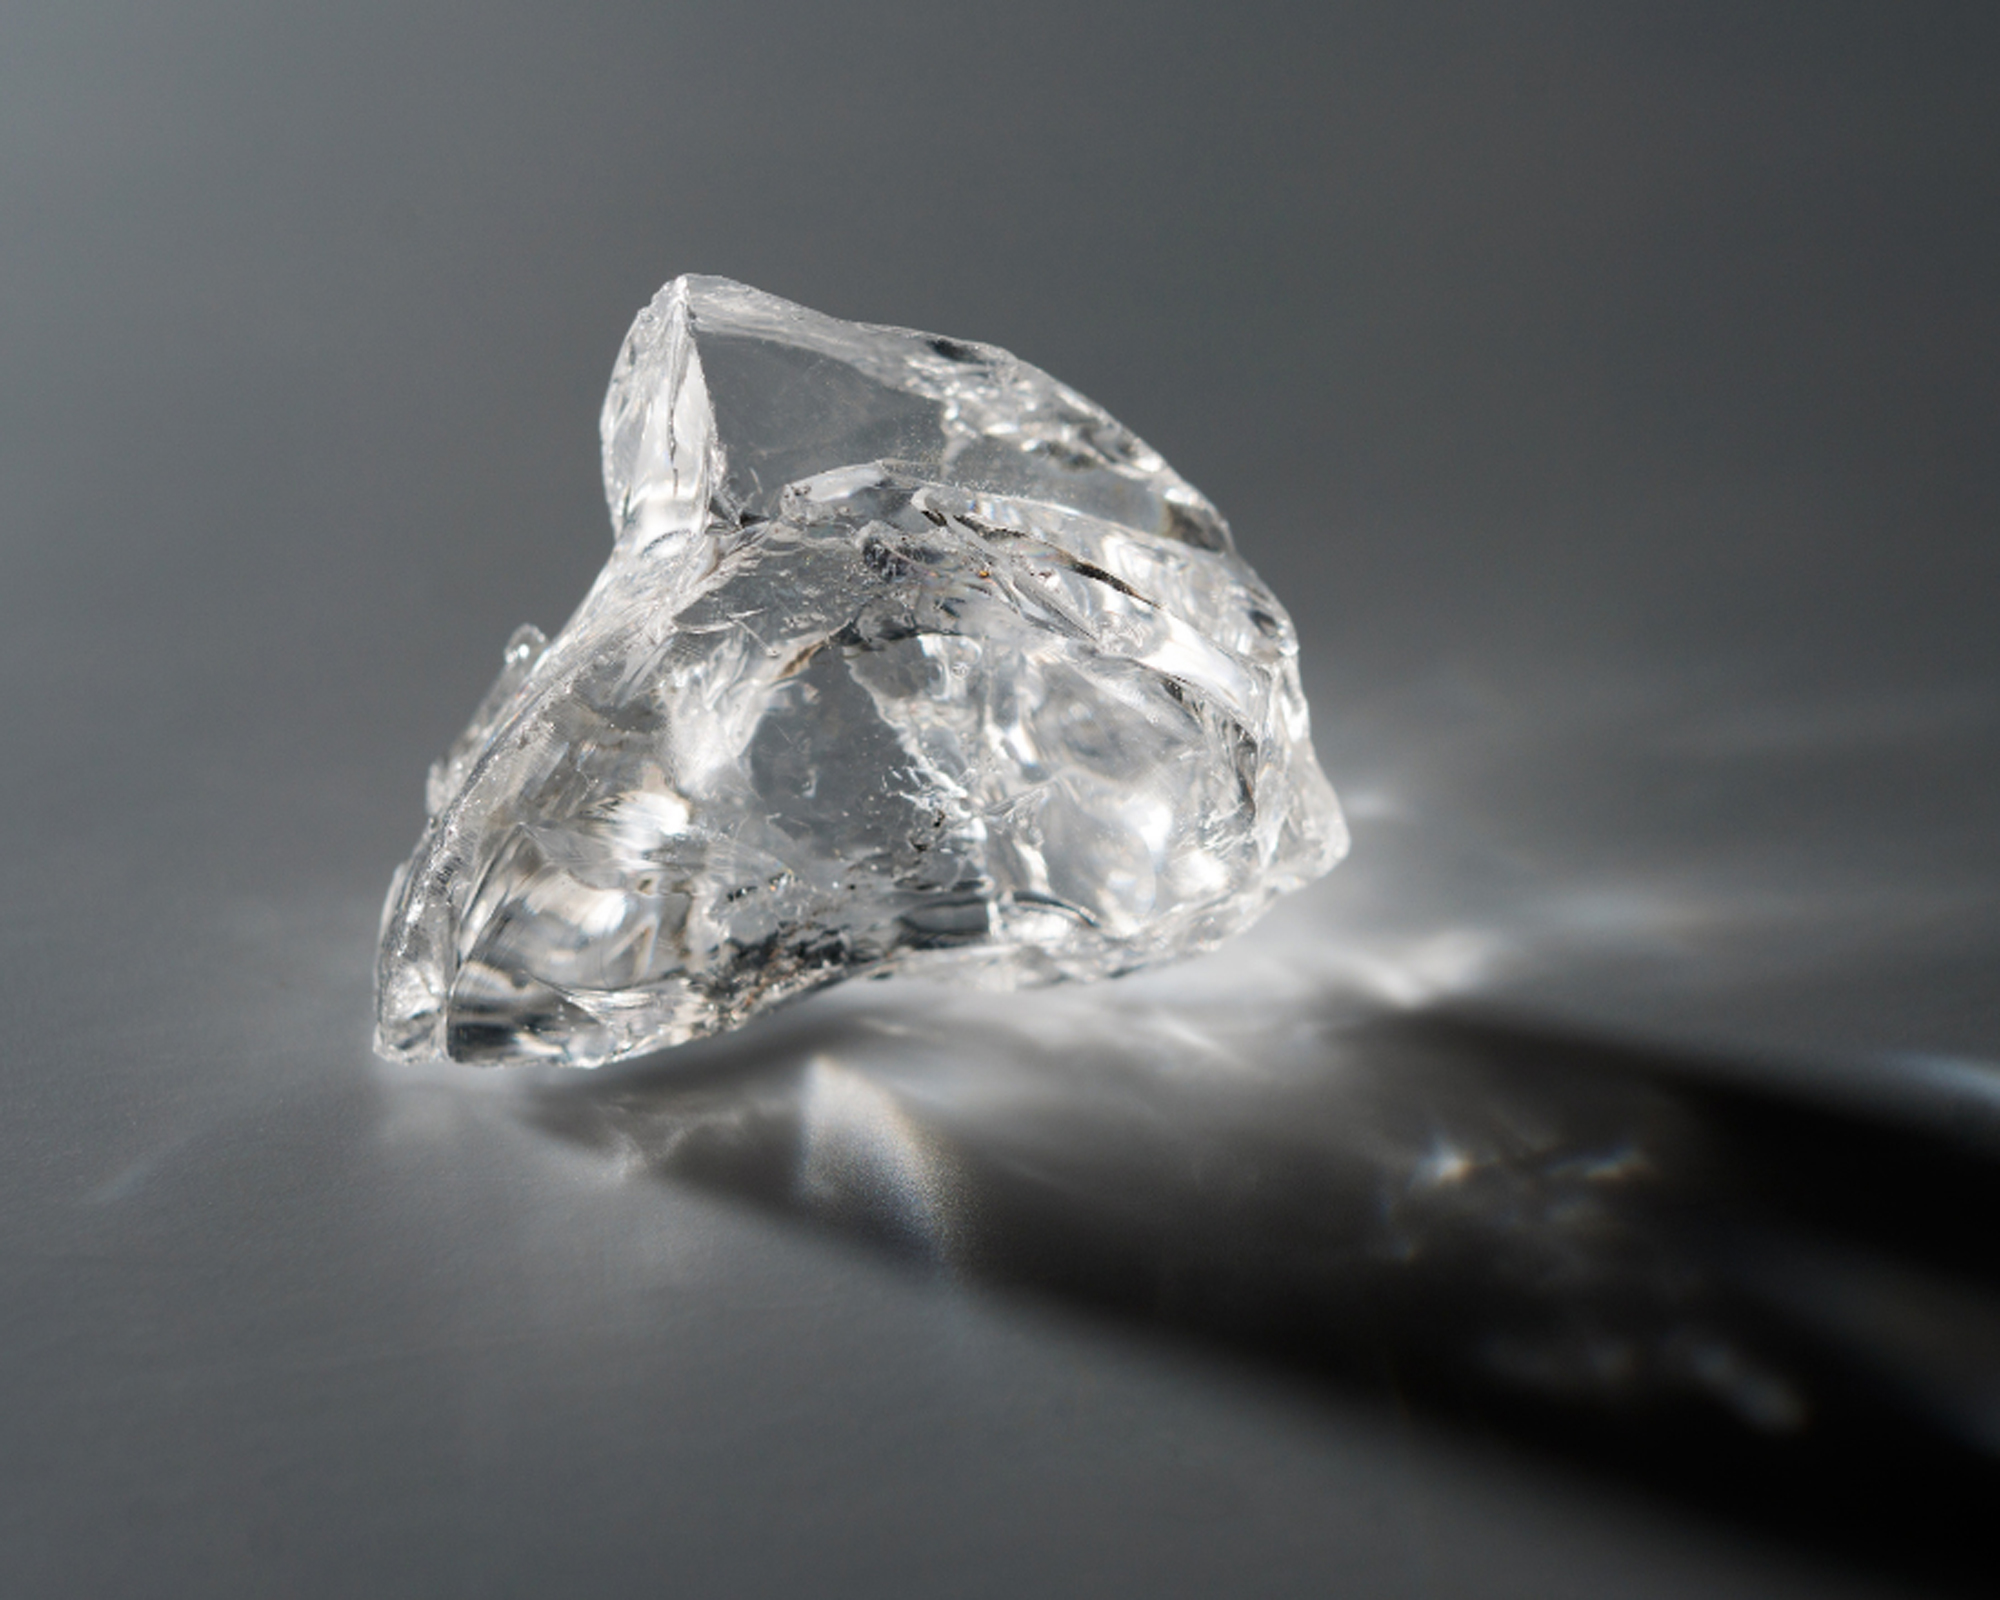 Lab-grown or natural diamond?